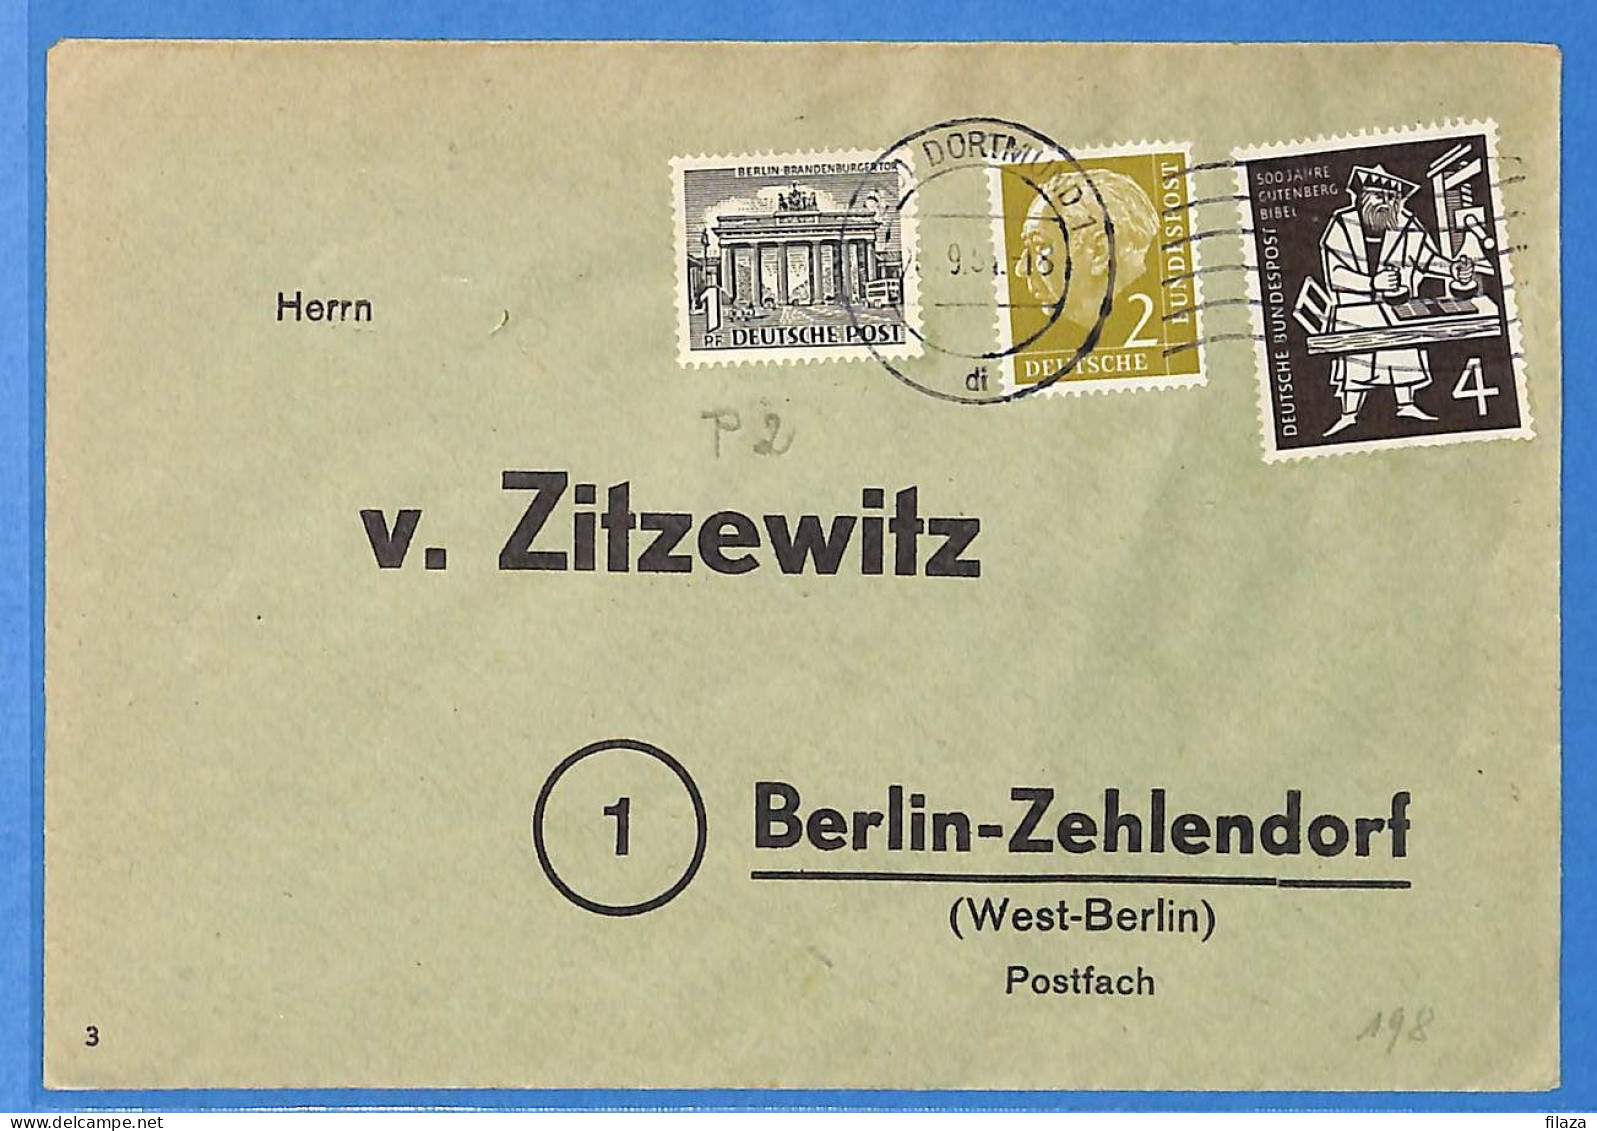 Berlin West 1954 - Lettre De Berlin - G33058 - Lettres & Documents